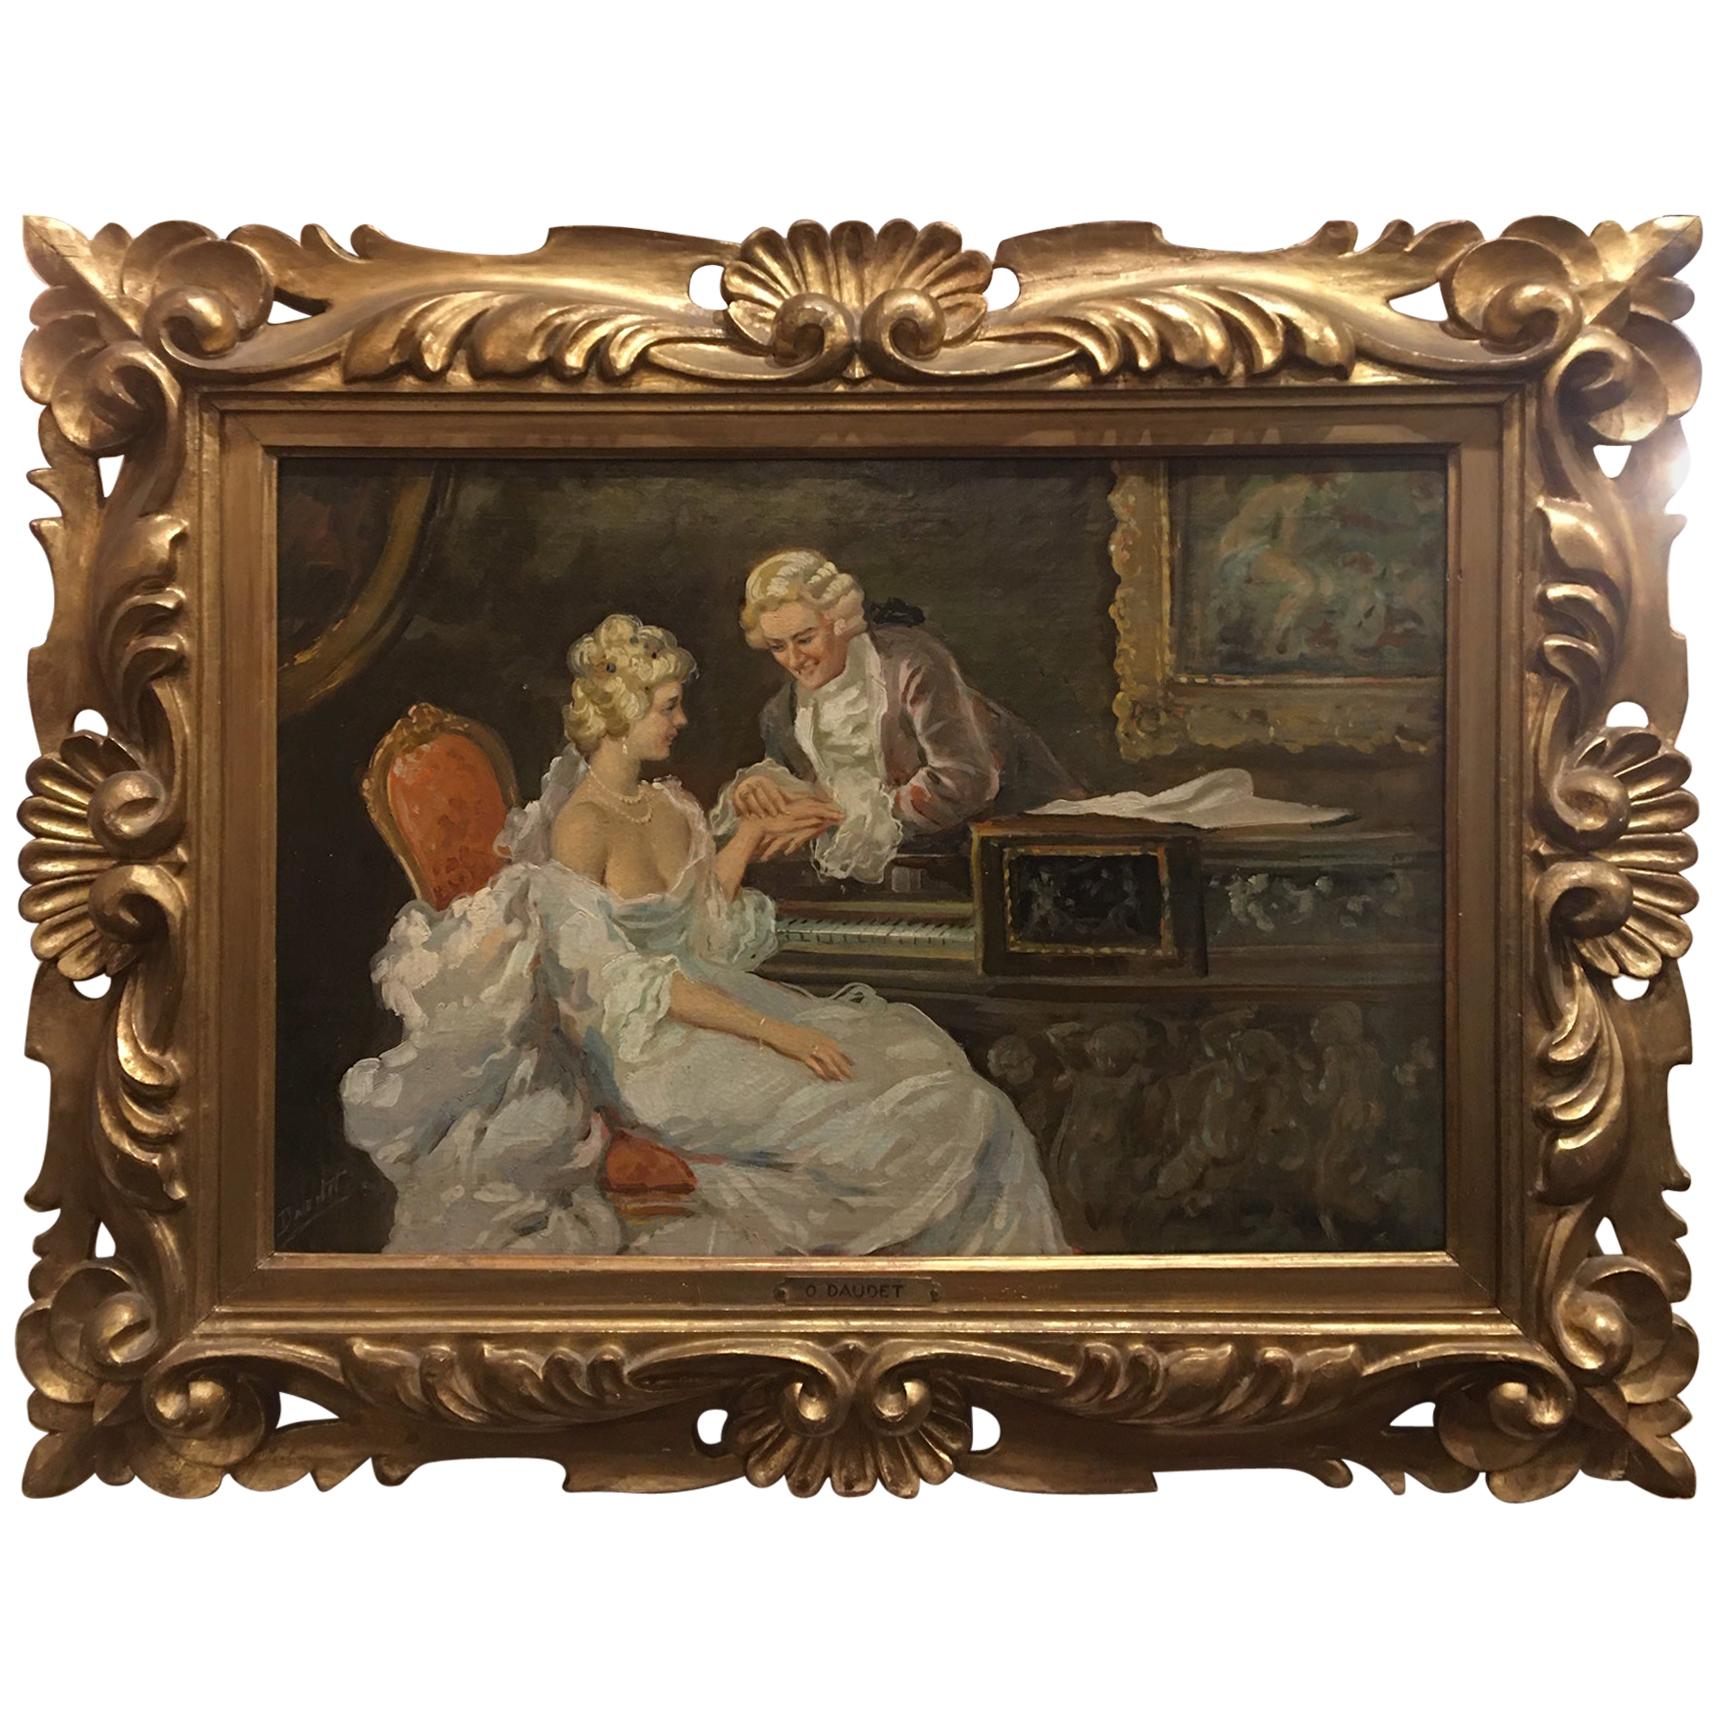 Oil on Canvas Painting "Romance Scene" Signed O. Daudet, Late 19th Century